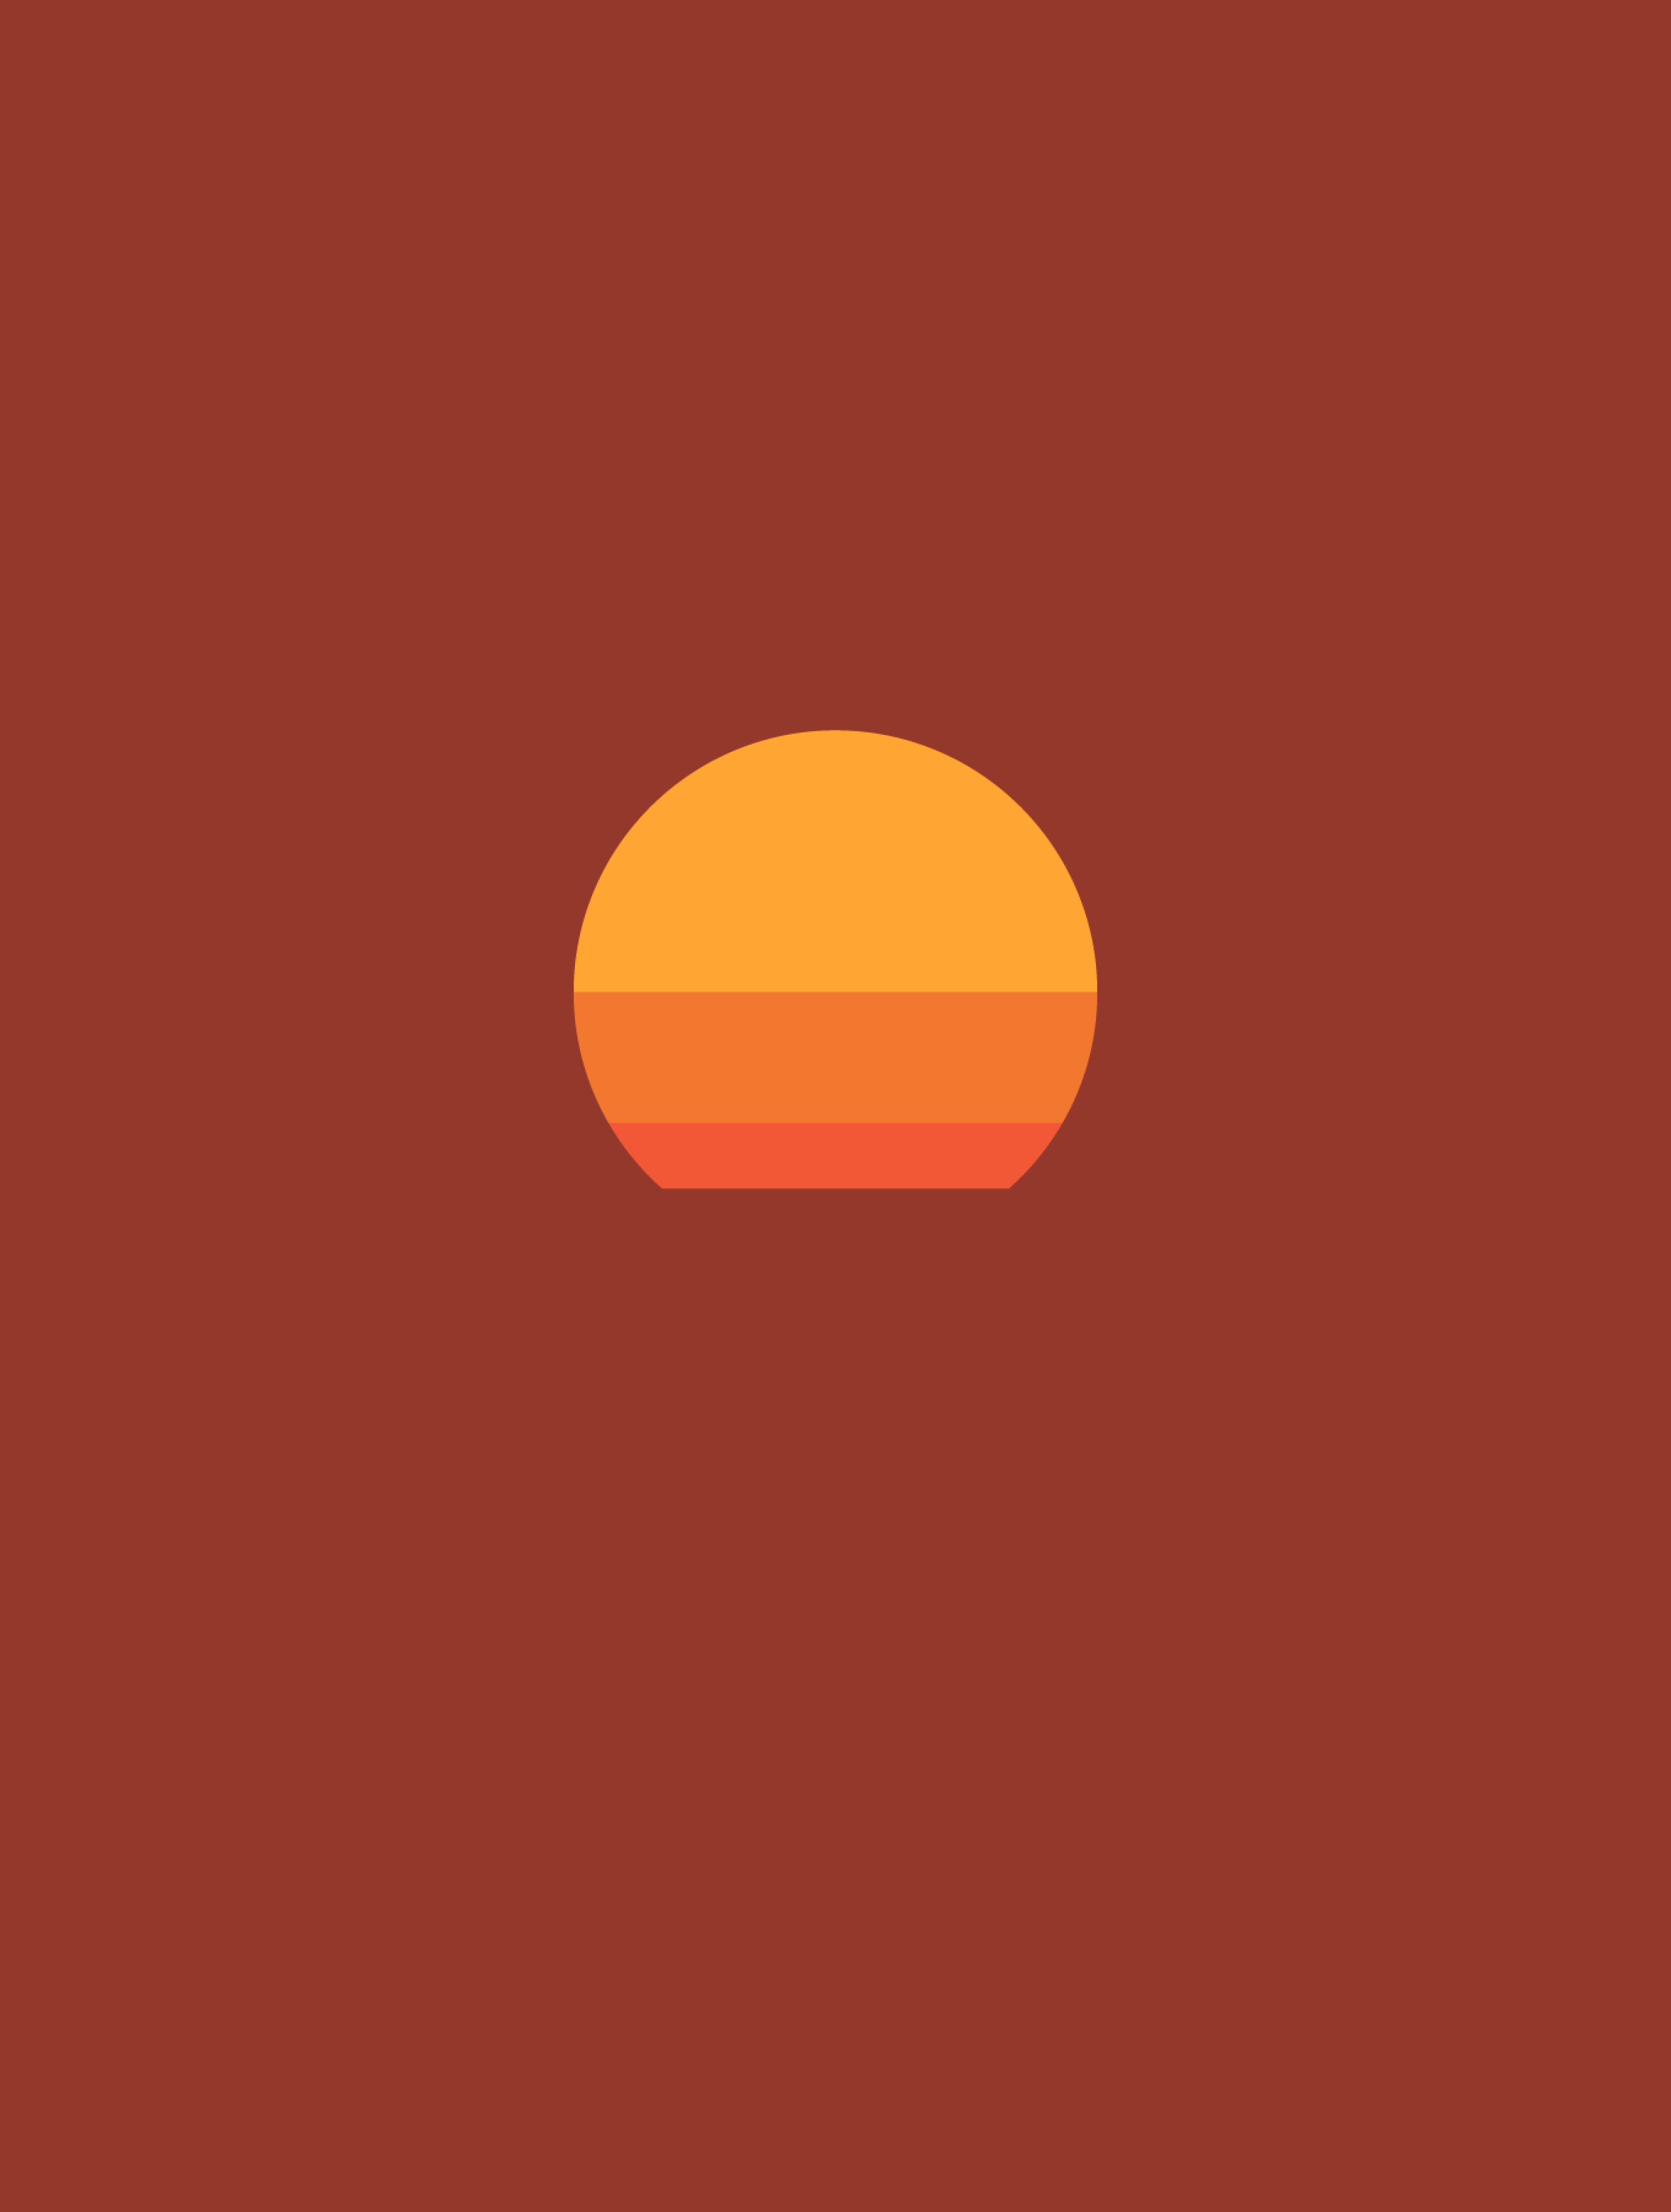 A minimalist sunset illustration with the sun as the focal point - Minimalist